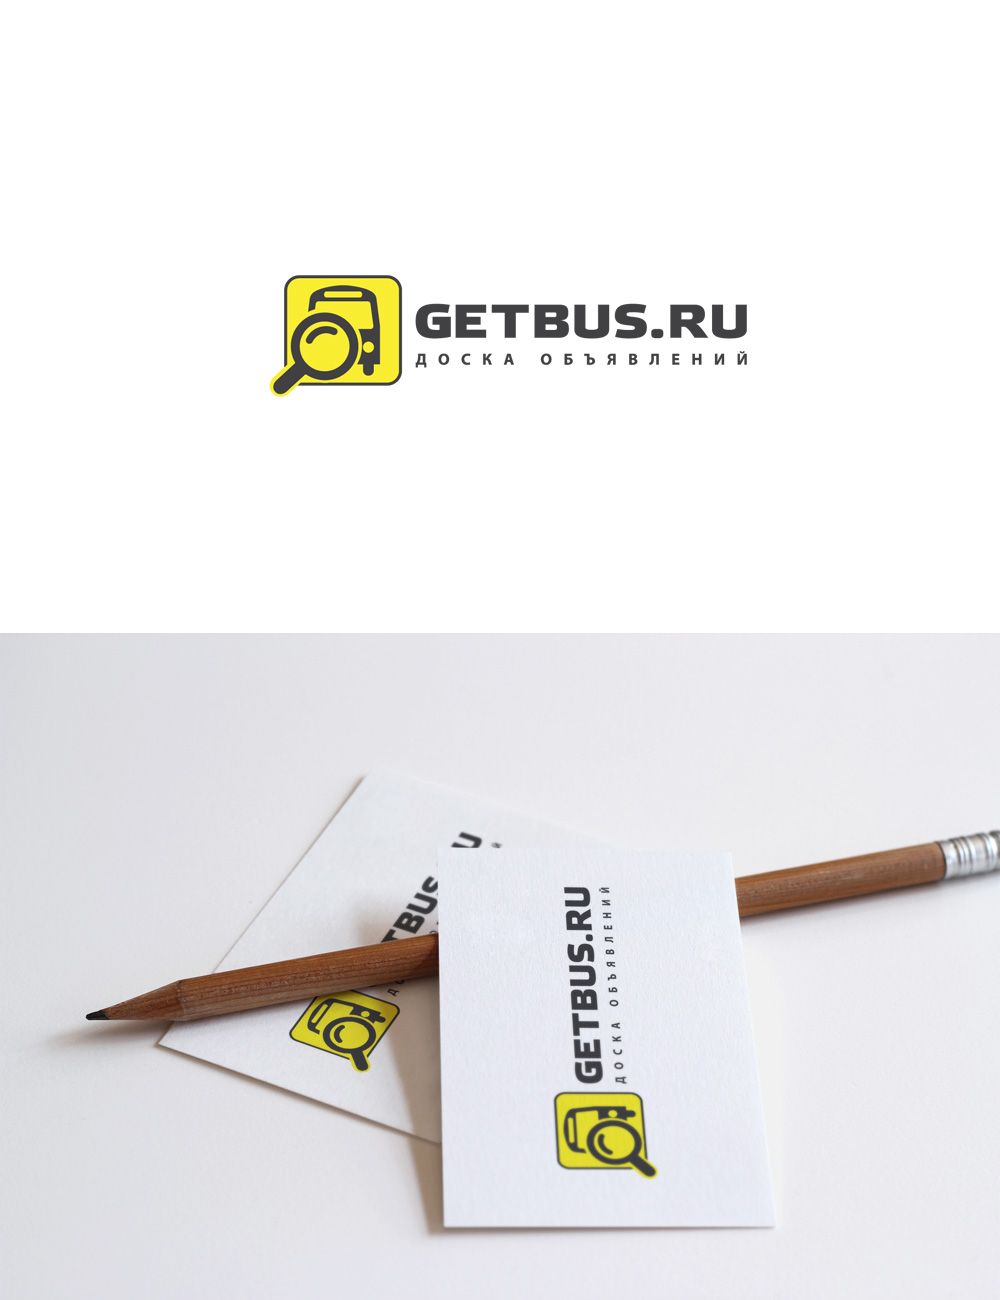 Логотип для Getbus.ru - дизайнер GreenRed